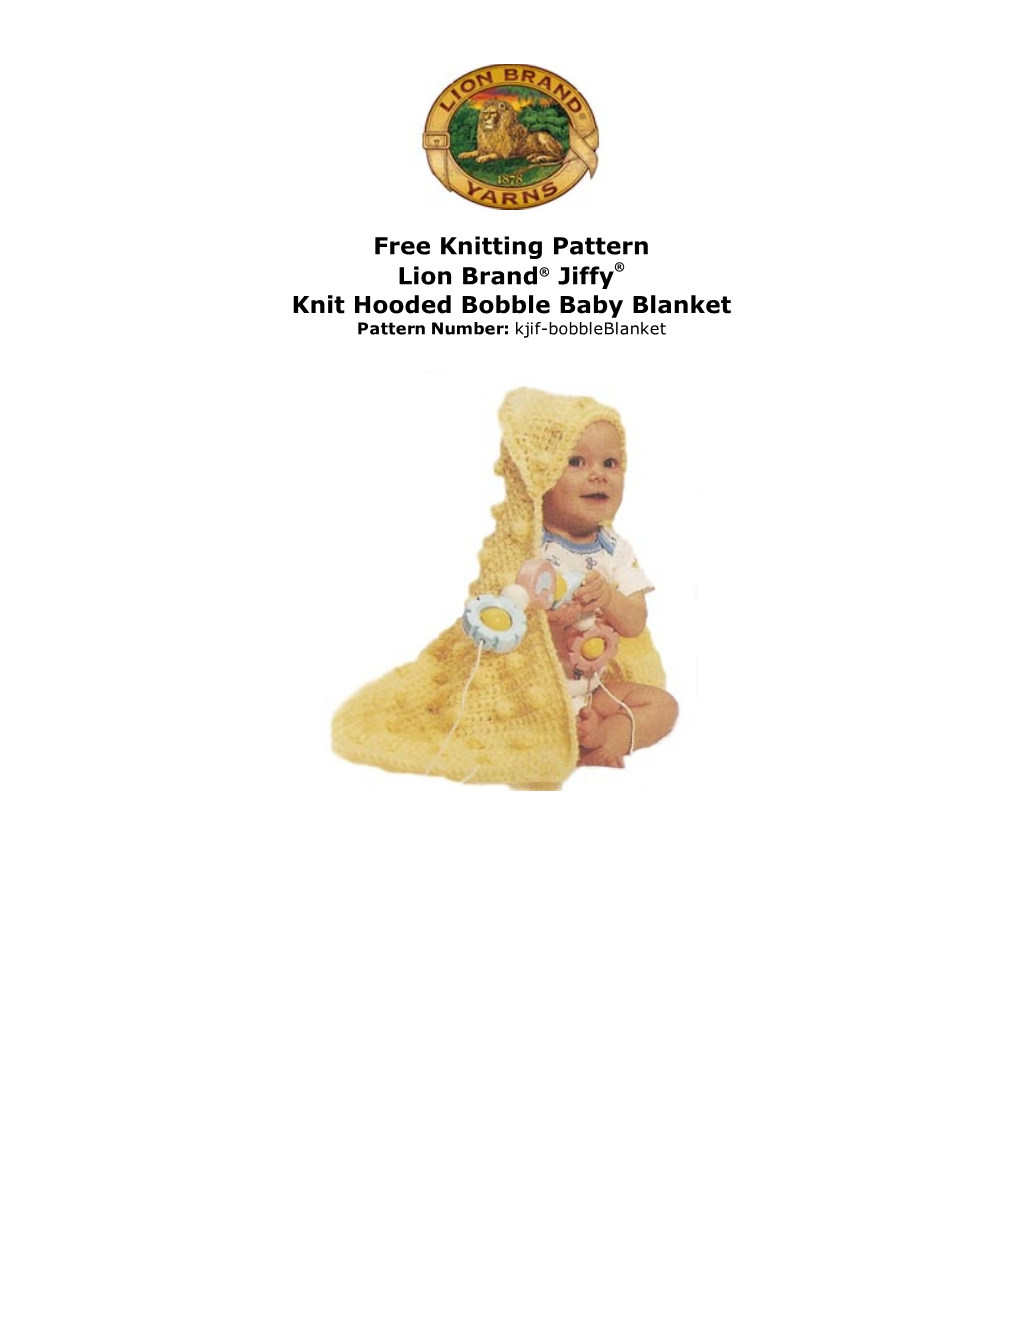 Free Knitting Pattern Lion Brand® Jiffy® Knit Hooded Bobble Baby Blanket